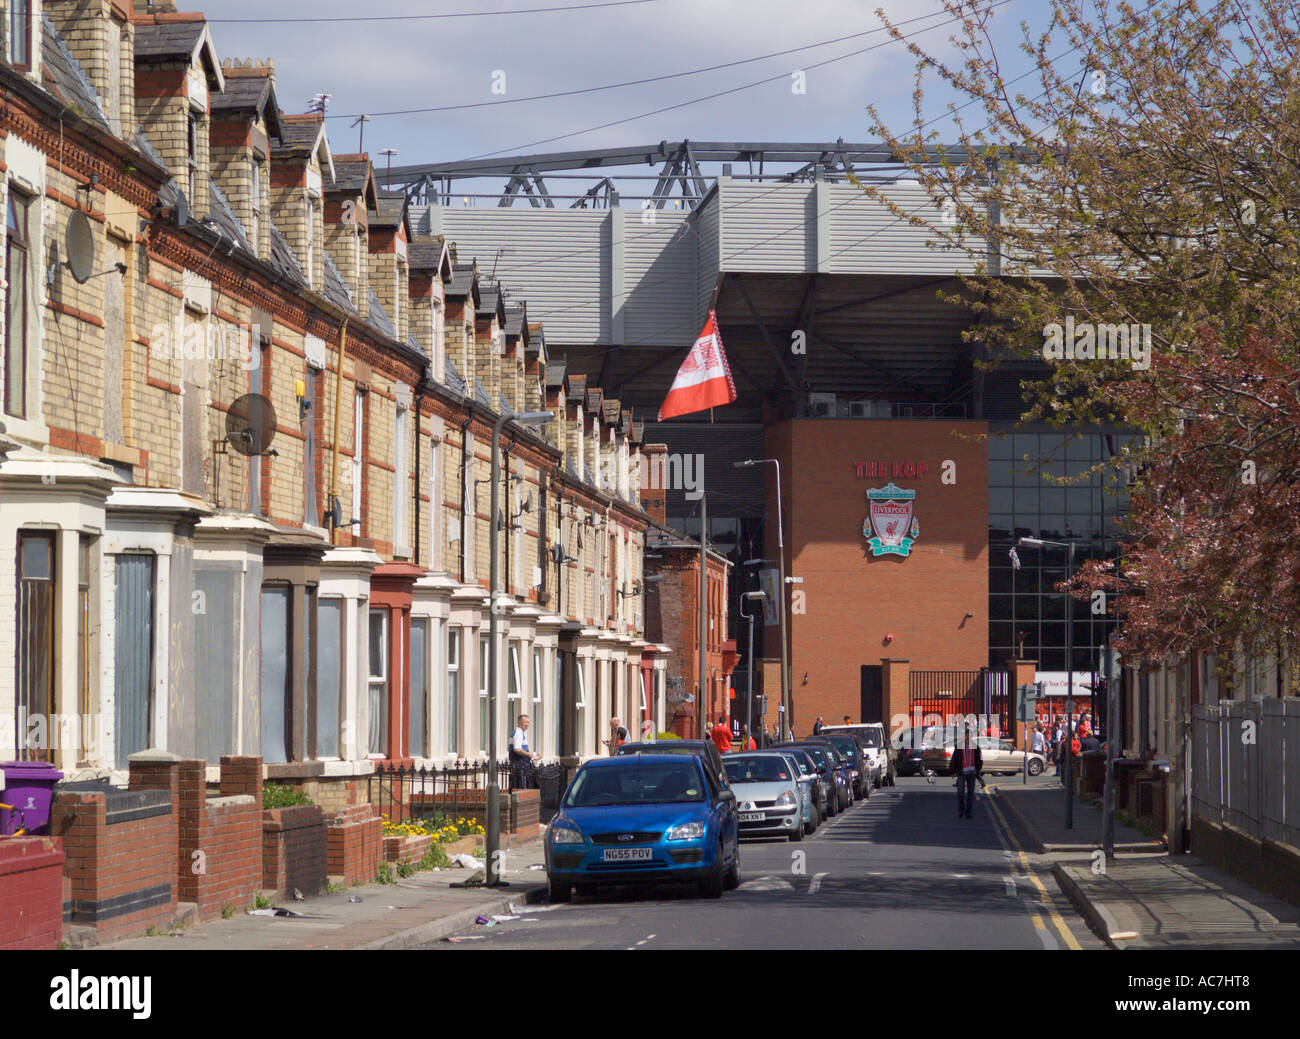 Liverpool Football Club Anfield Road Anfield Liverpool Merseyside England Stock Photo